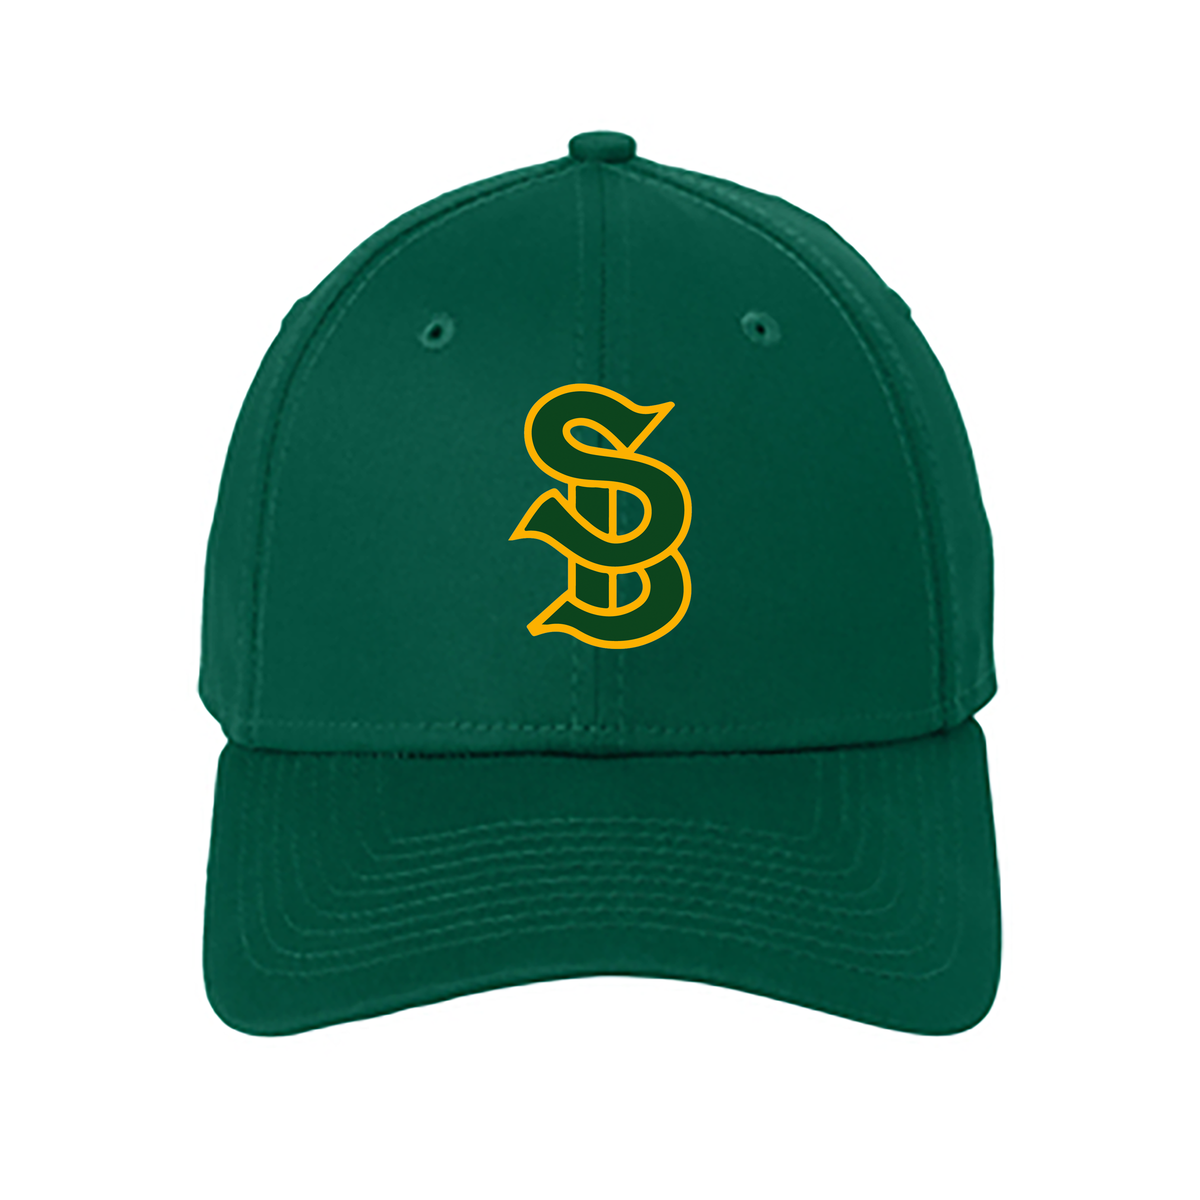 Santa Barbara HS Baseball New Era Structured Stretch Cotton Cap